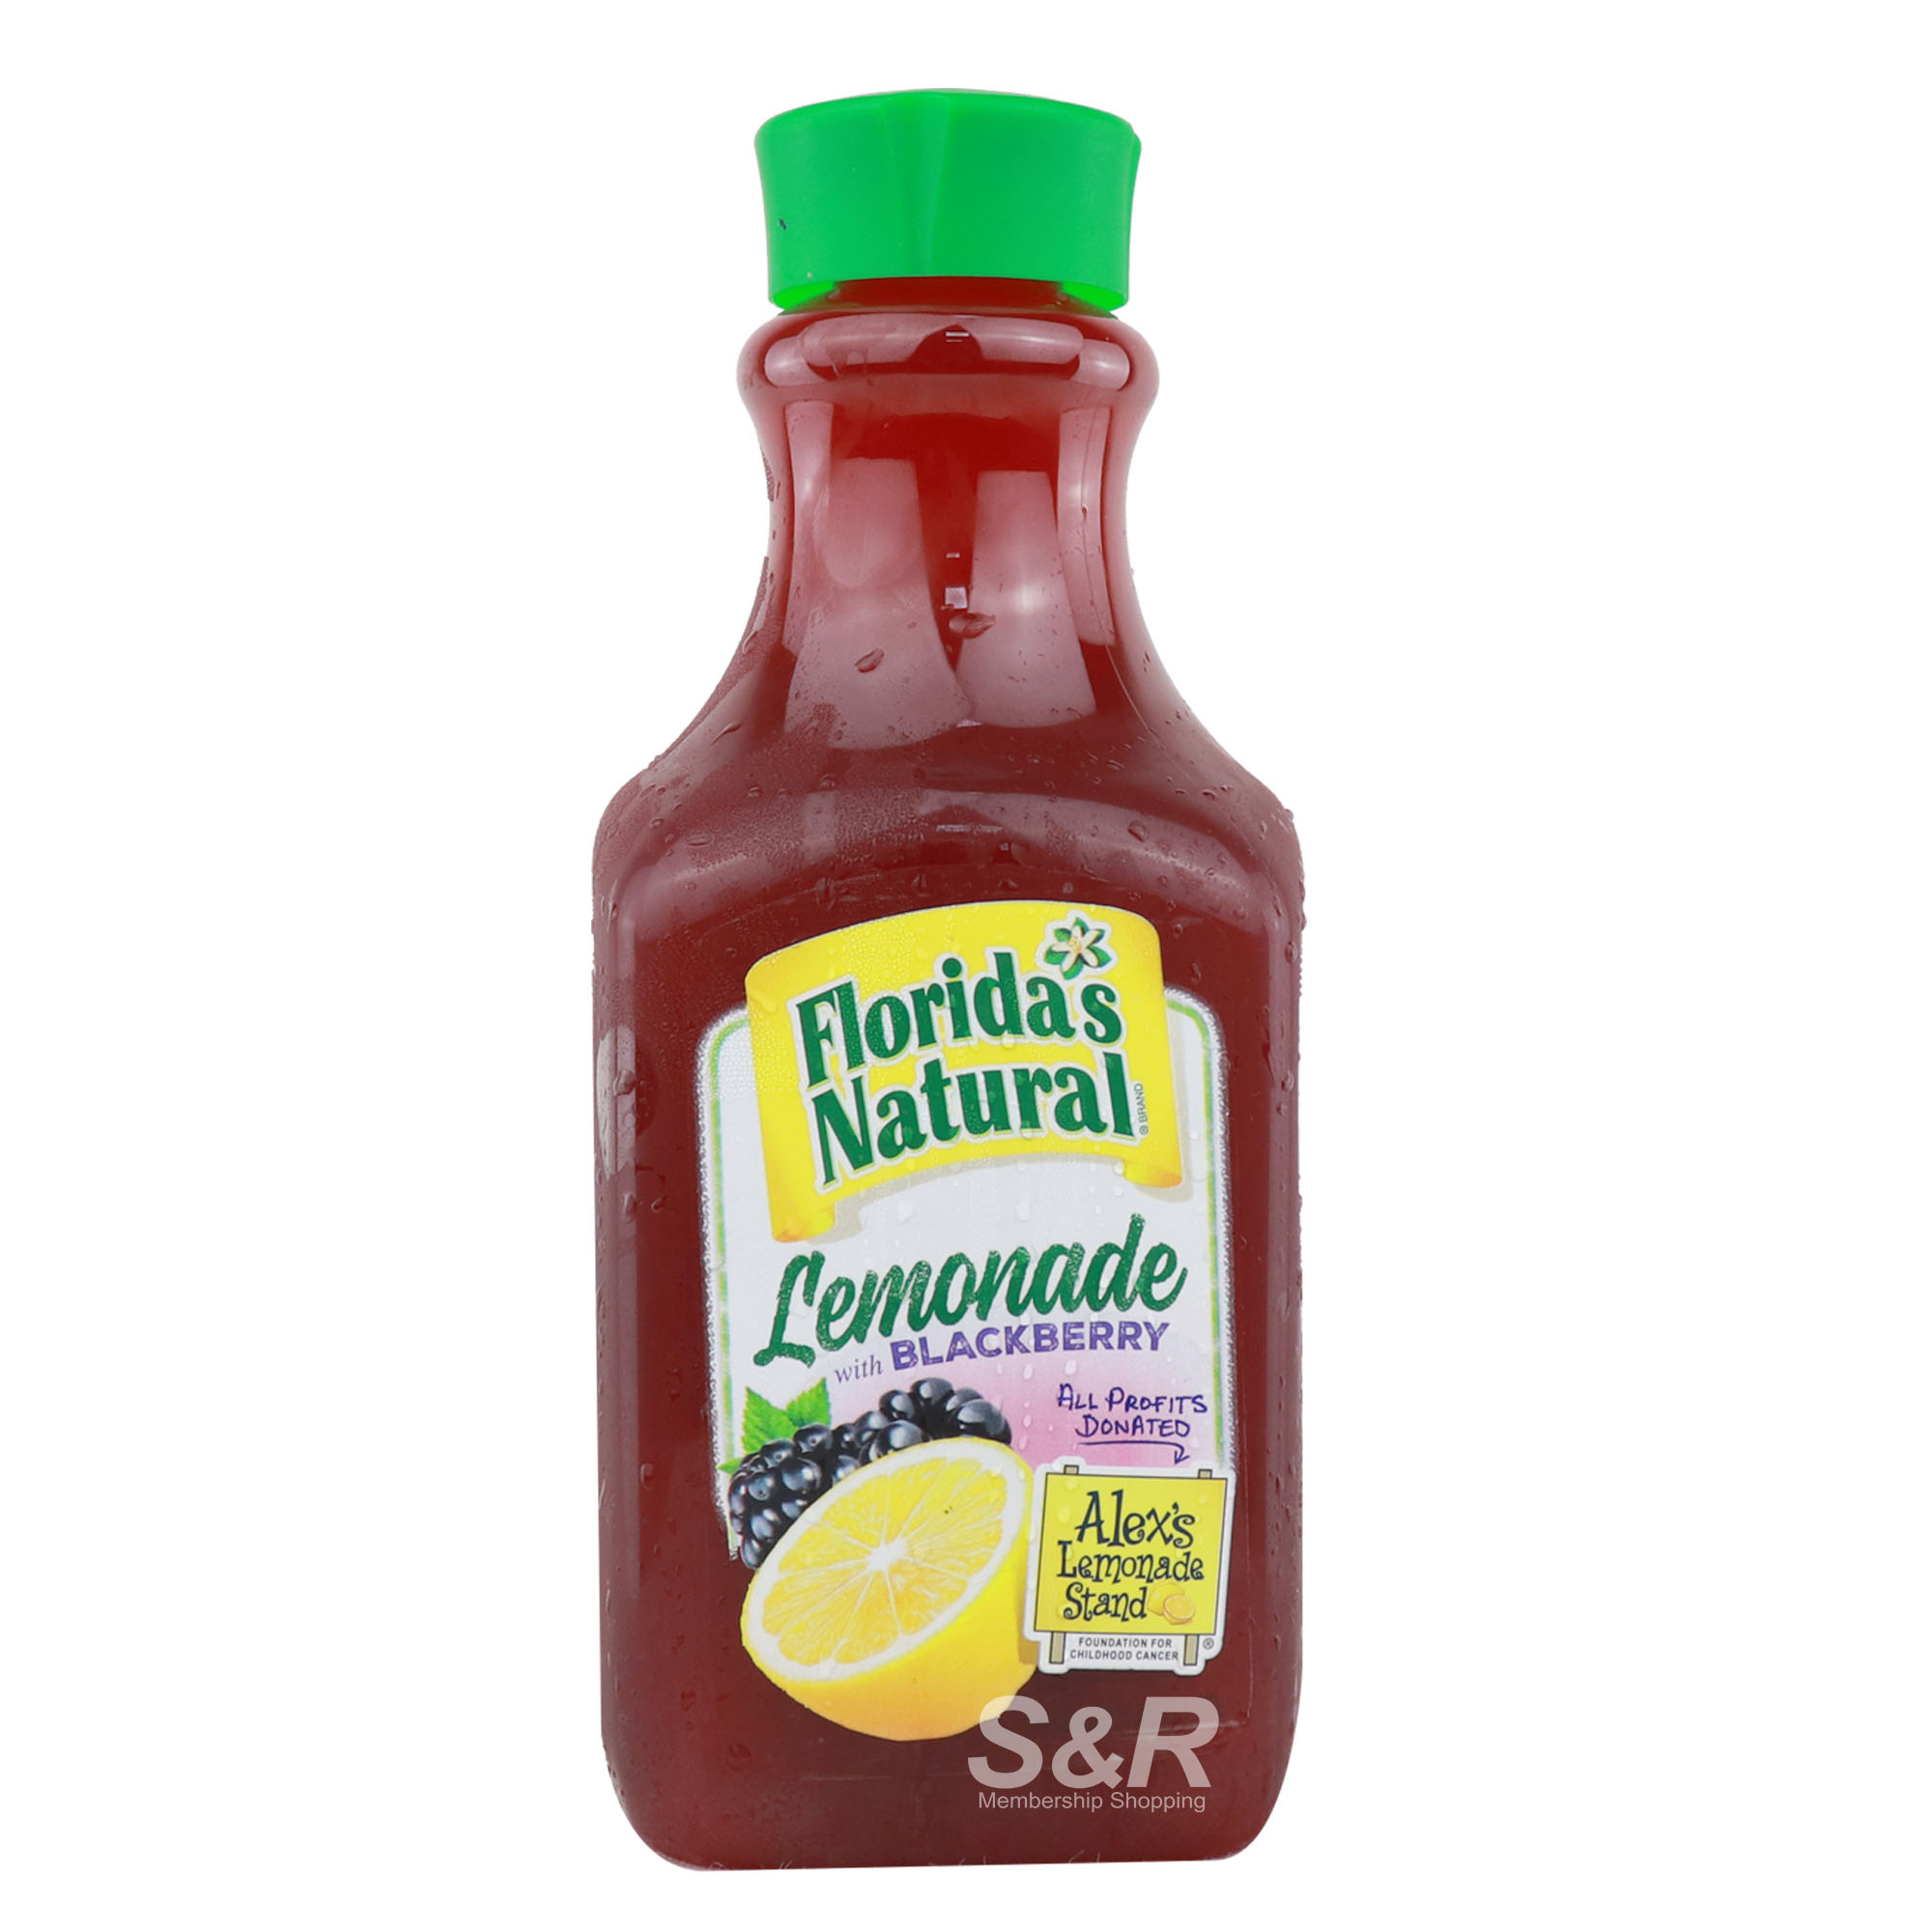 Florida's Natural Lemonade with Blackberry 1.75L